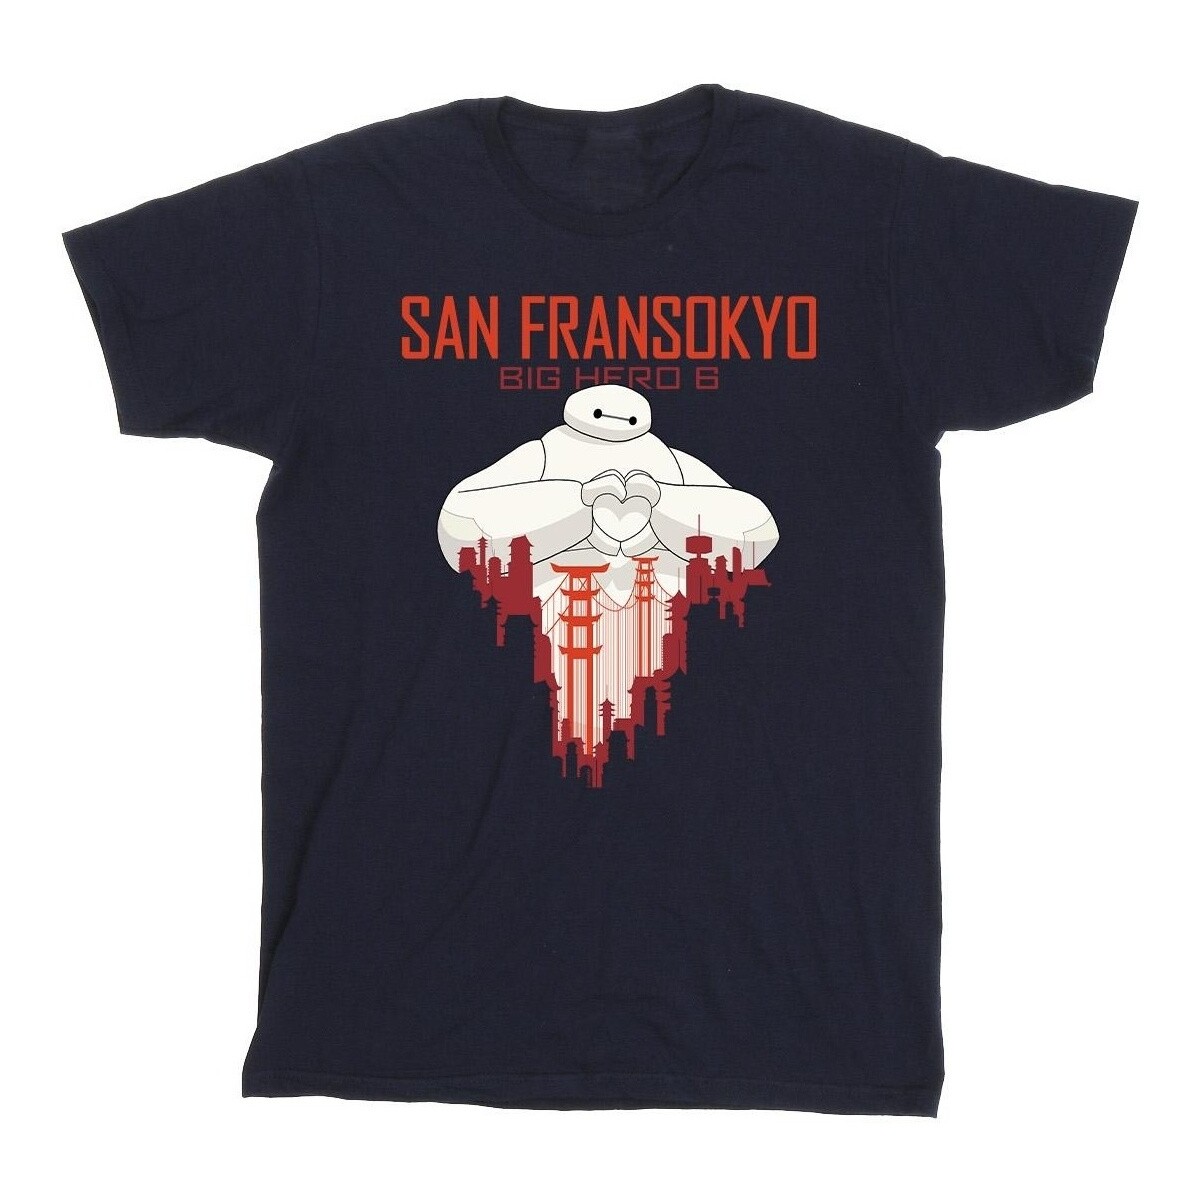 Vêtements Homme T-shirts manches longues Disney Big Hero 6 Baymax San Fransokyo Heart Bleu